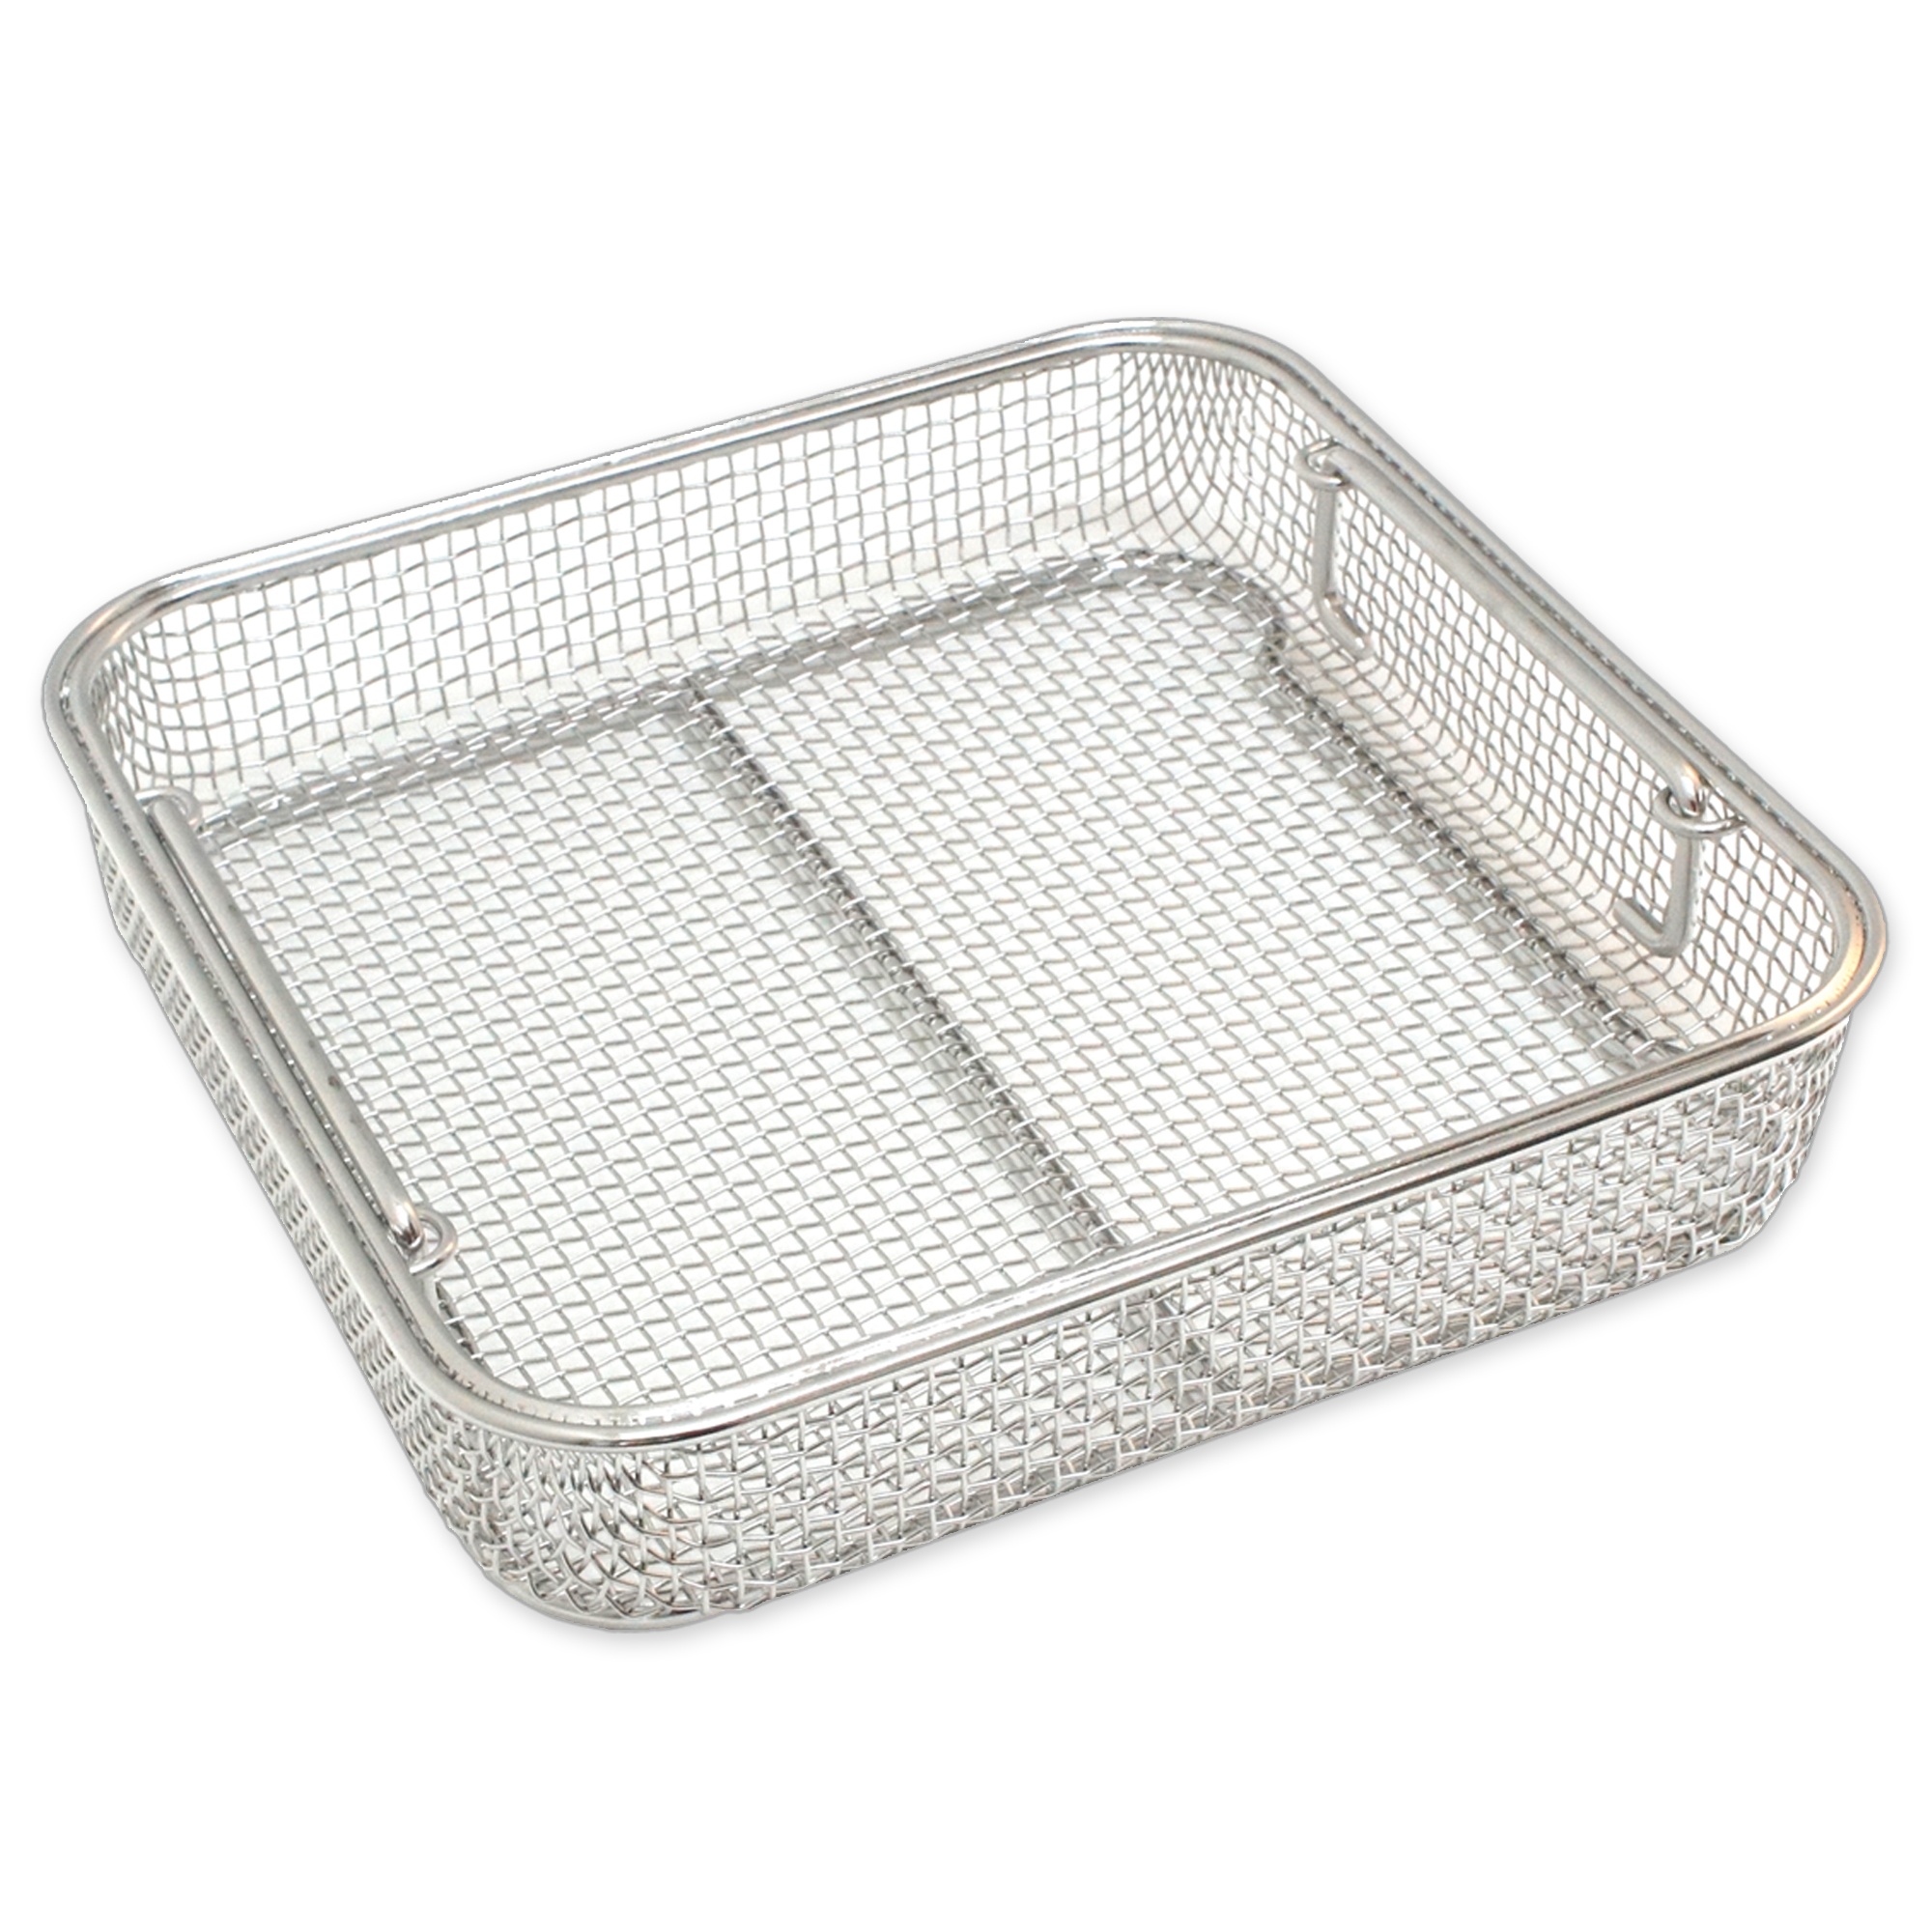 Mesh basket with handles Image